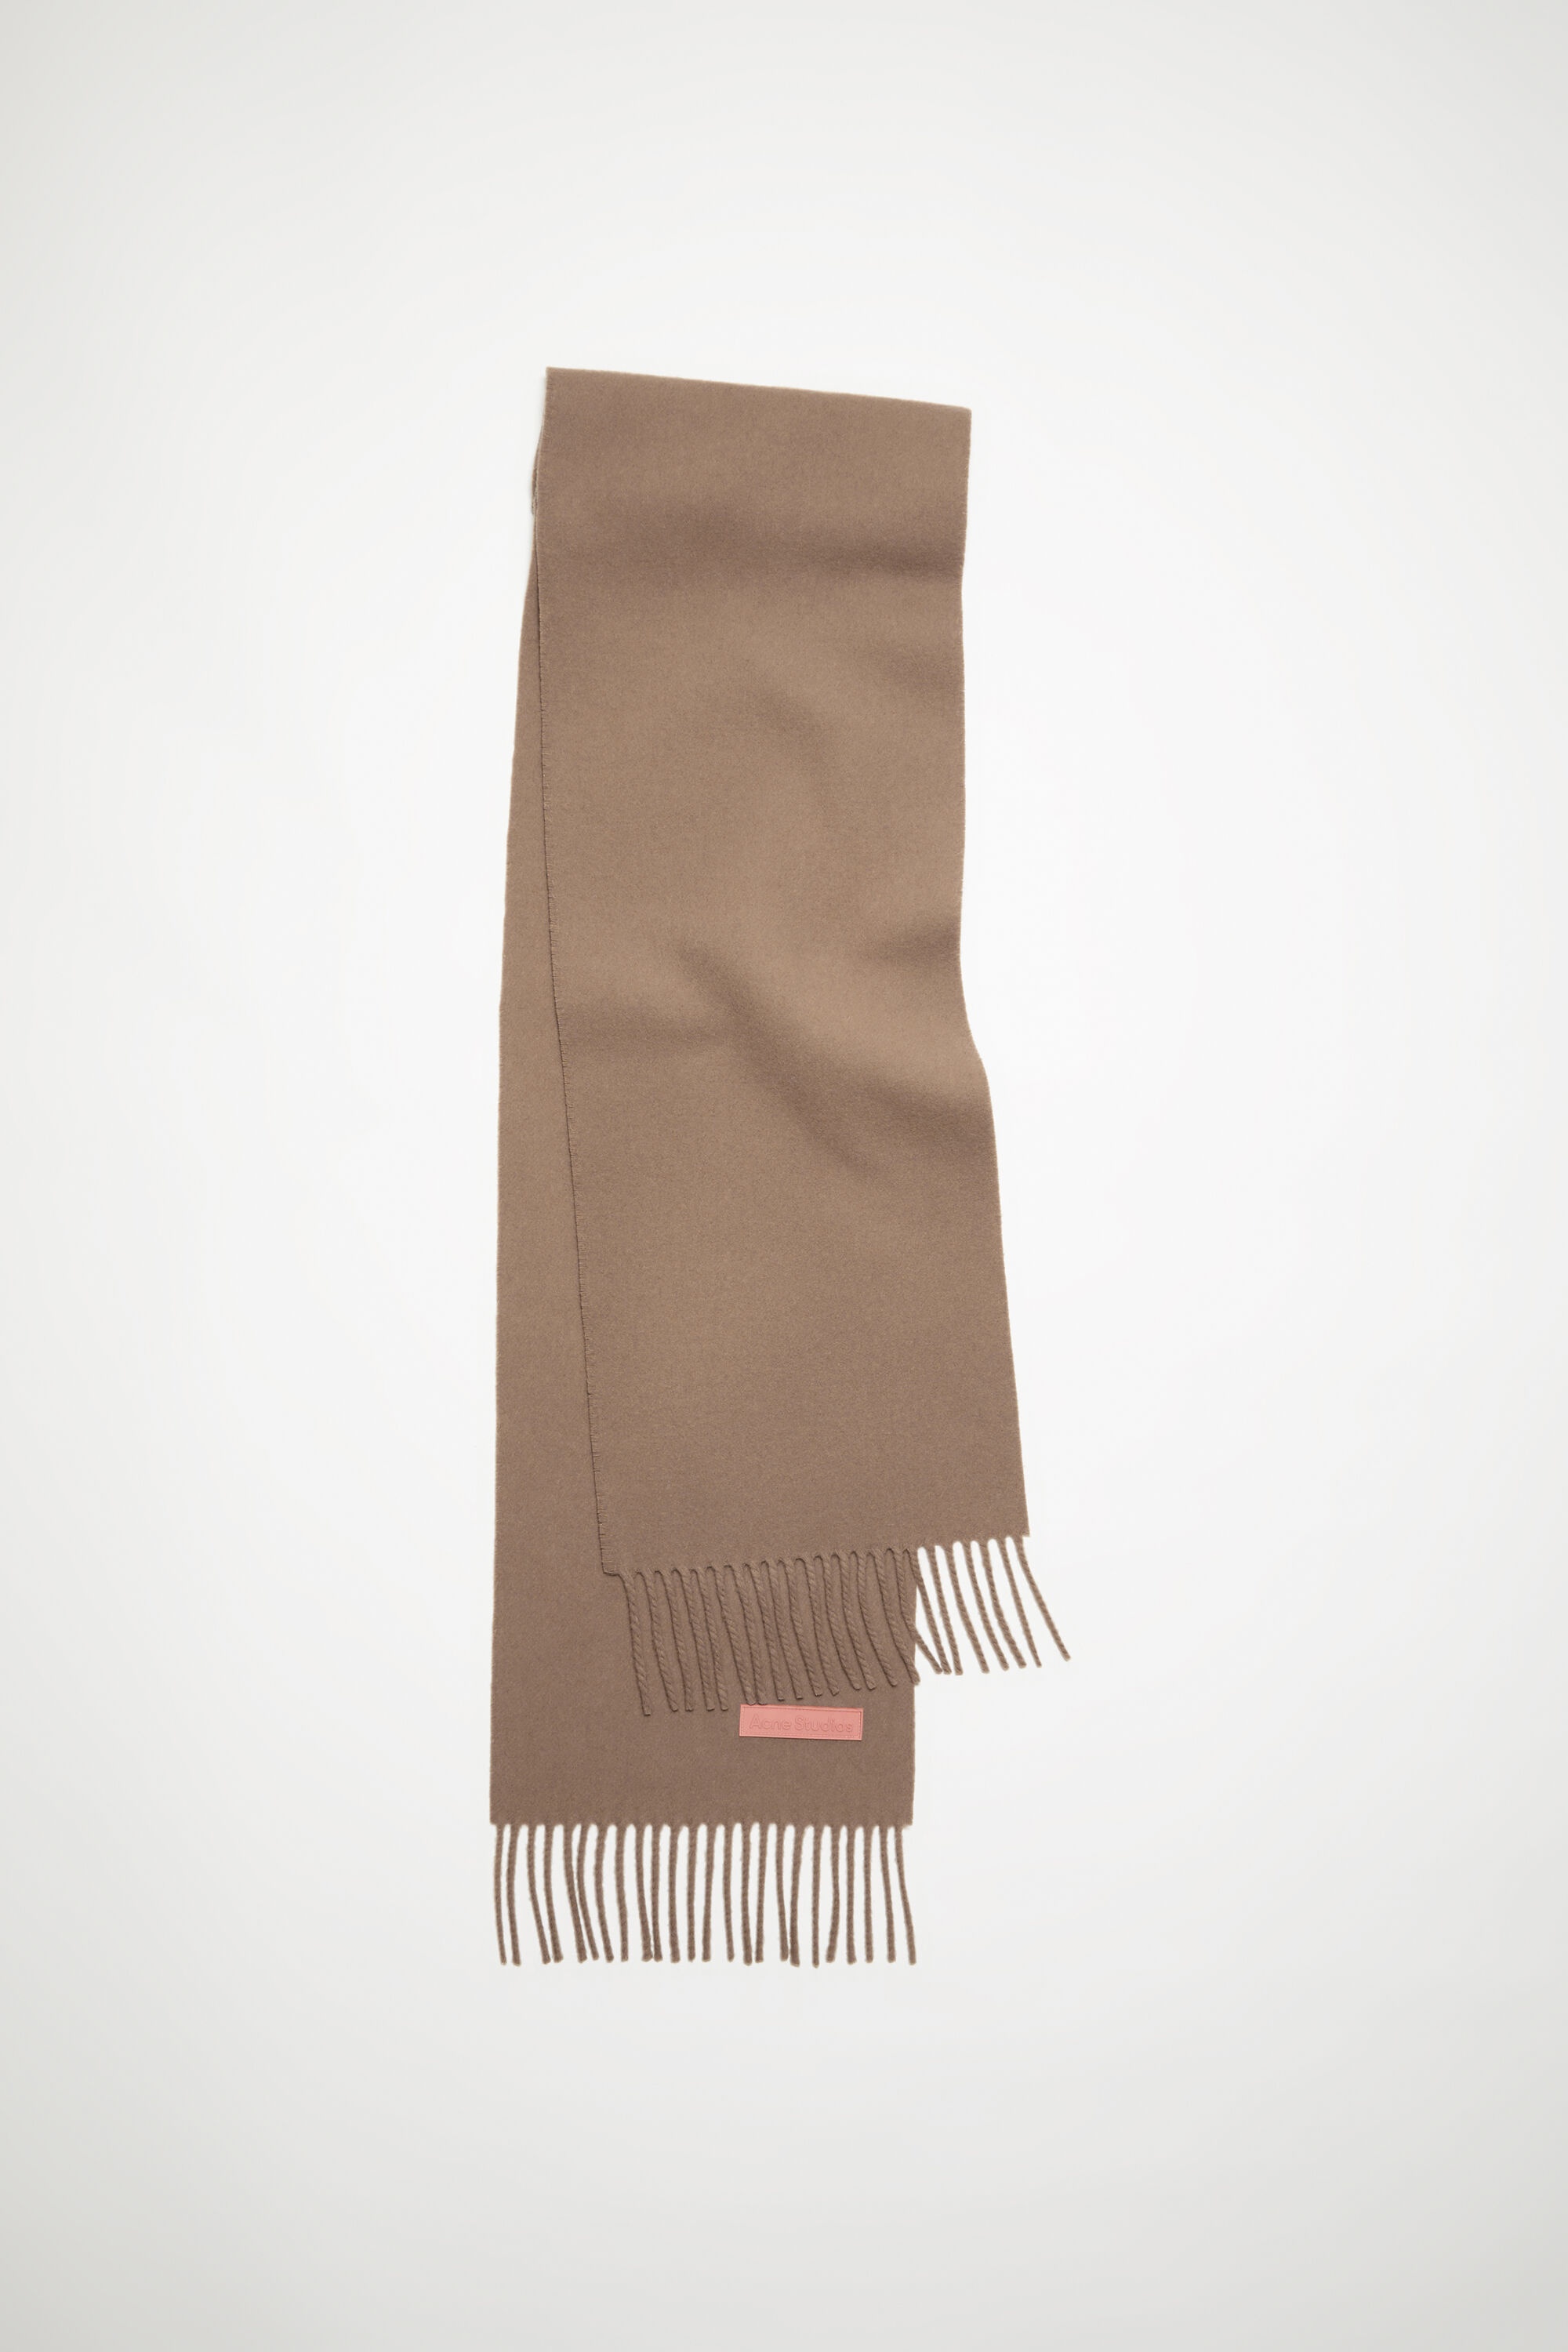 Wool scarf pink label - Narrow - Warm beige - 1